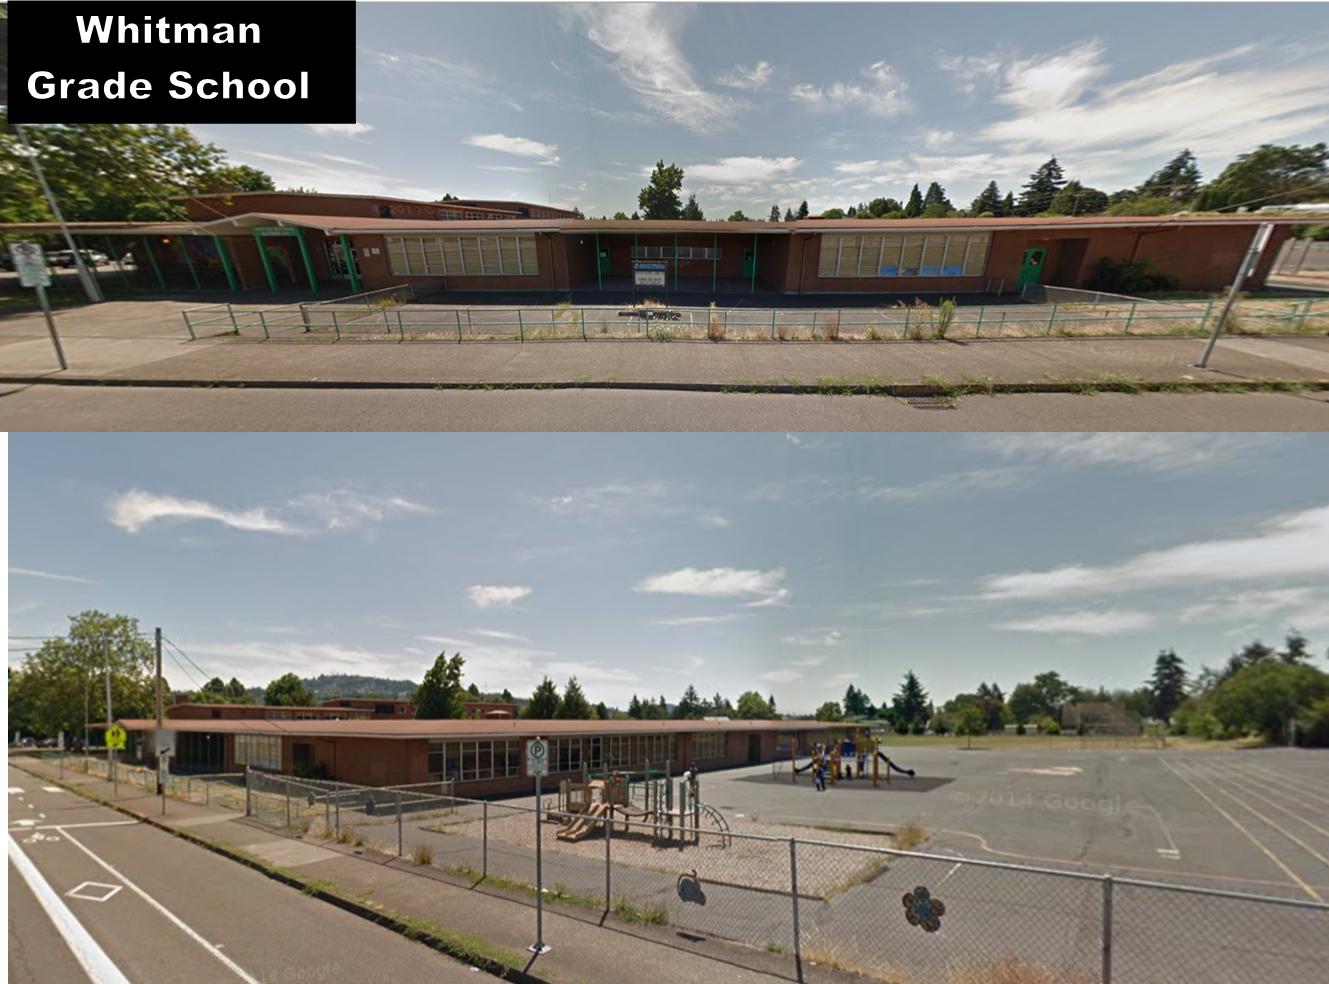 Whitman Grade School